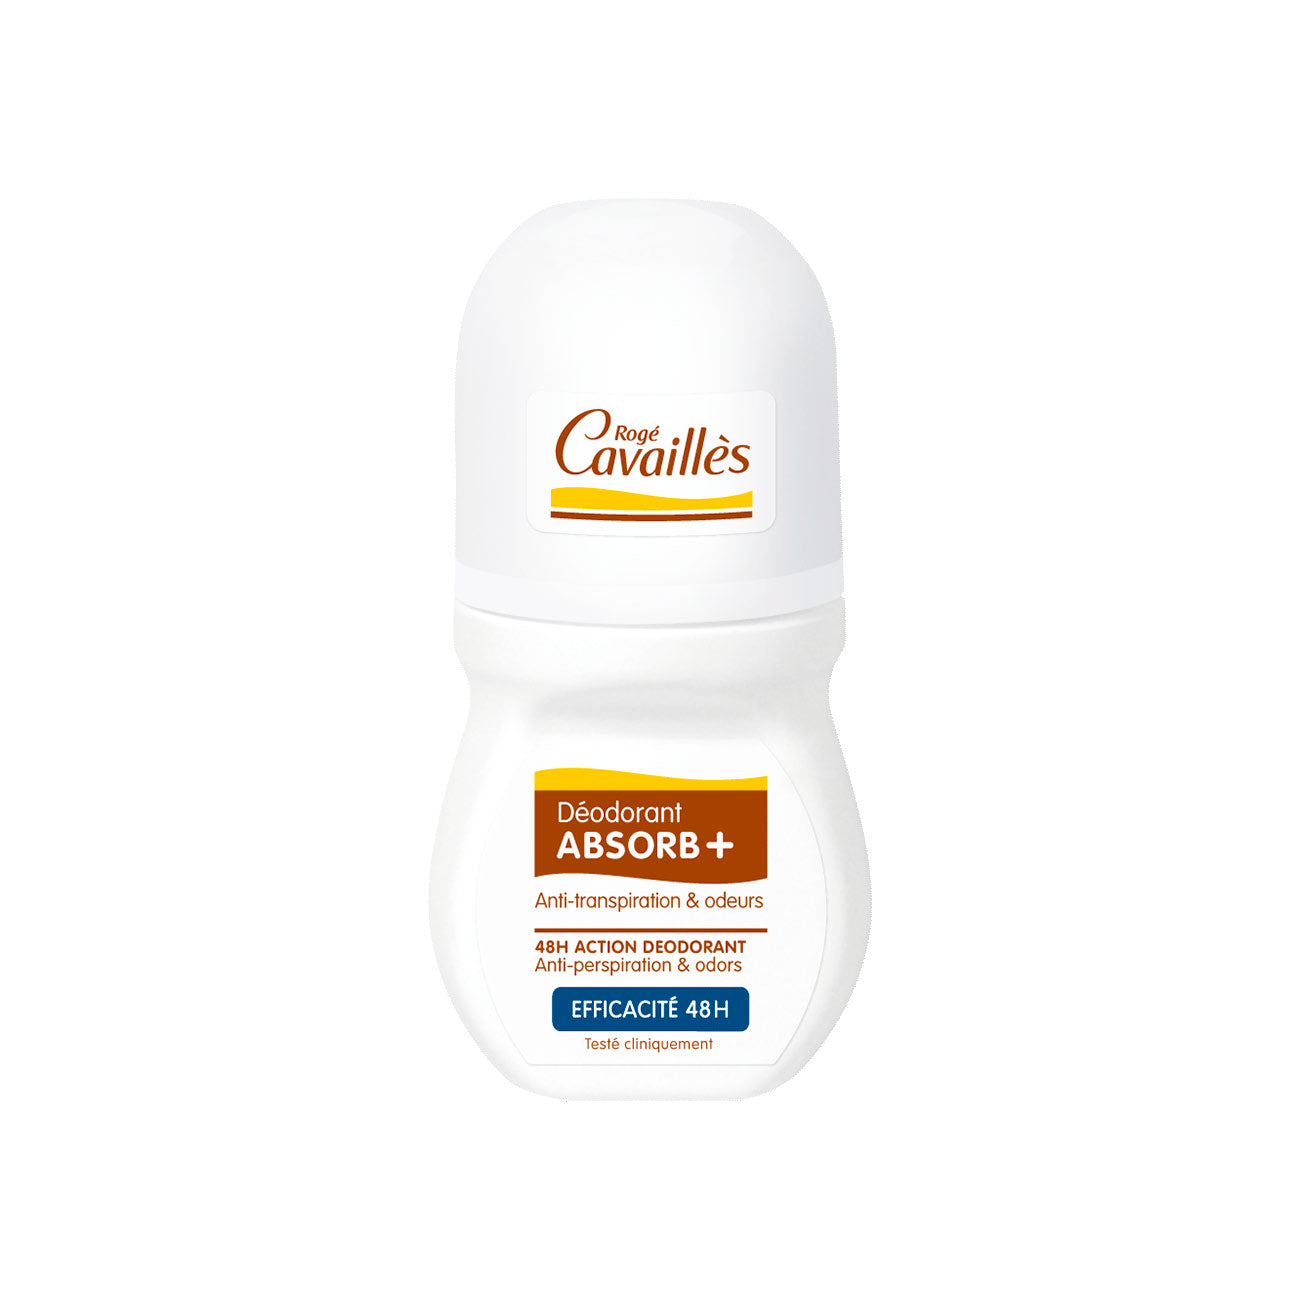 Absorb+ 48H Action Deodorant Efficacité 48H - MazenOnline